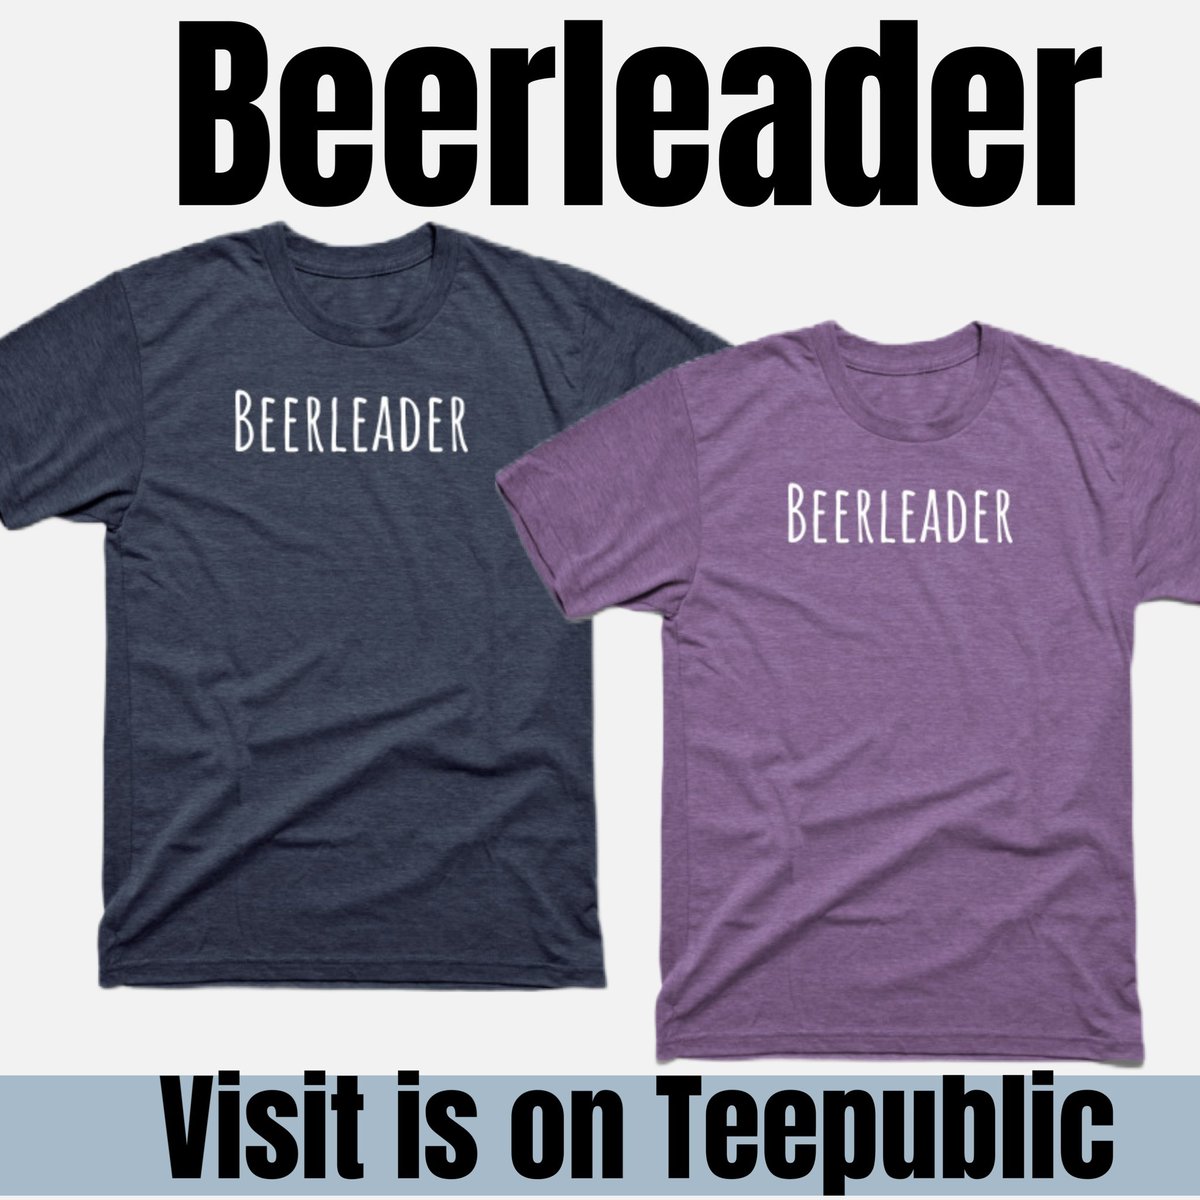 Over 200 designs to choose from. Teepublic link: bit.ly/DBTeez    #beer #beers #beerleader #craftbeer #craftbeers #beergeeks #beernerds #craftbeergeeks #beergirl #beerlover #publife #beerswag #beershirt #beershirts #beerdad #beermeme #beermemes #tshirts #teepublic